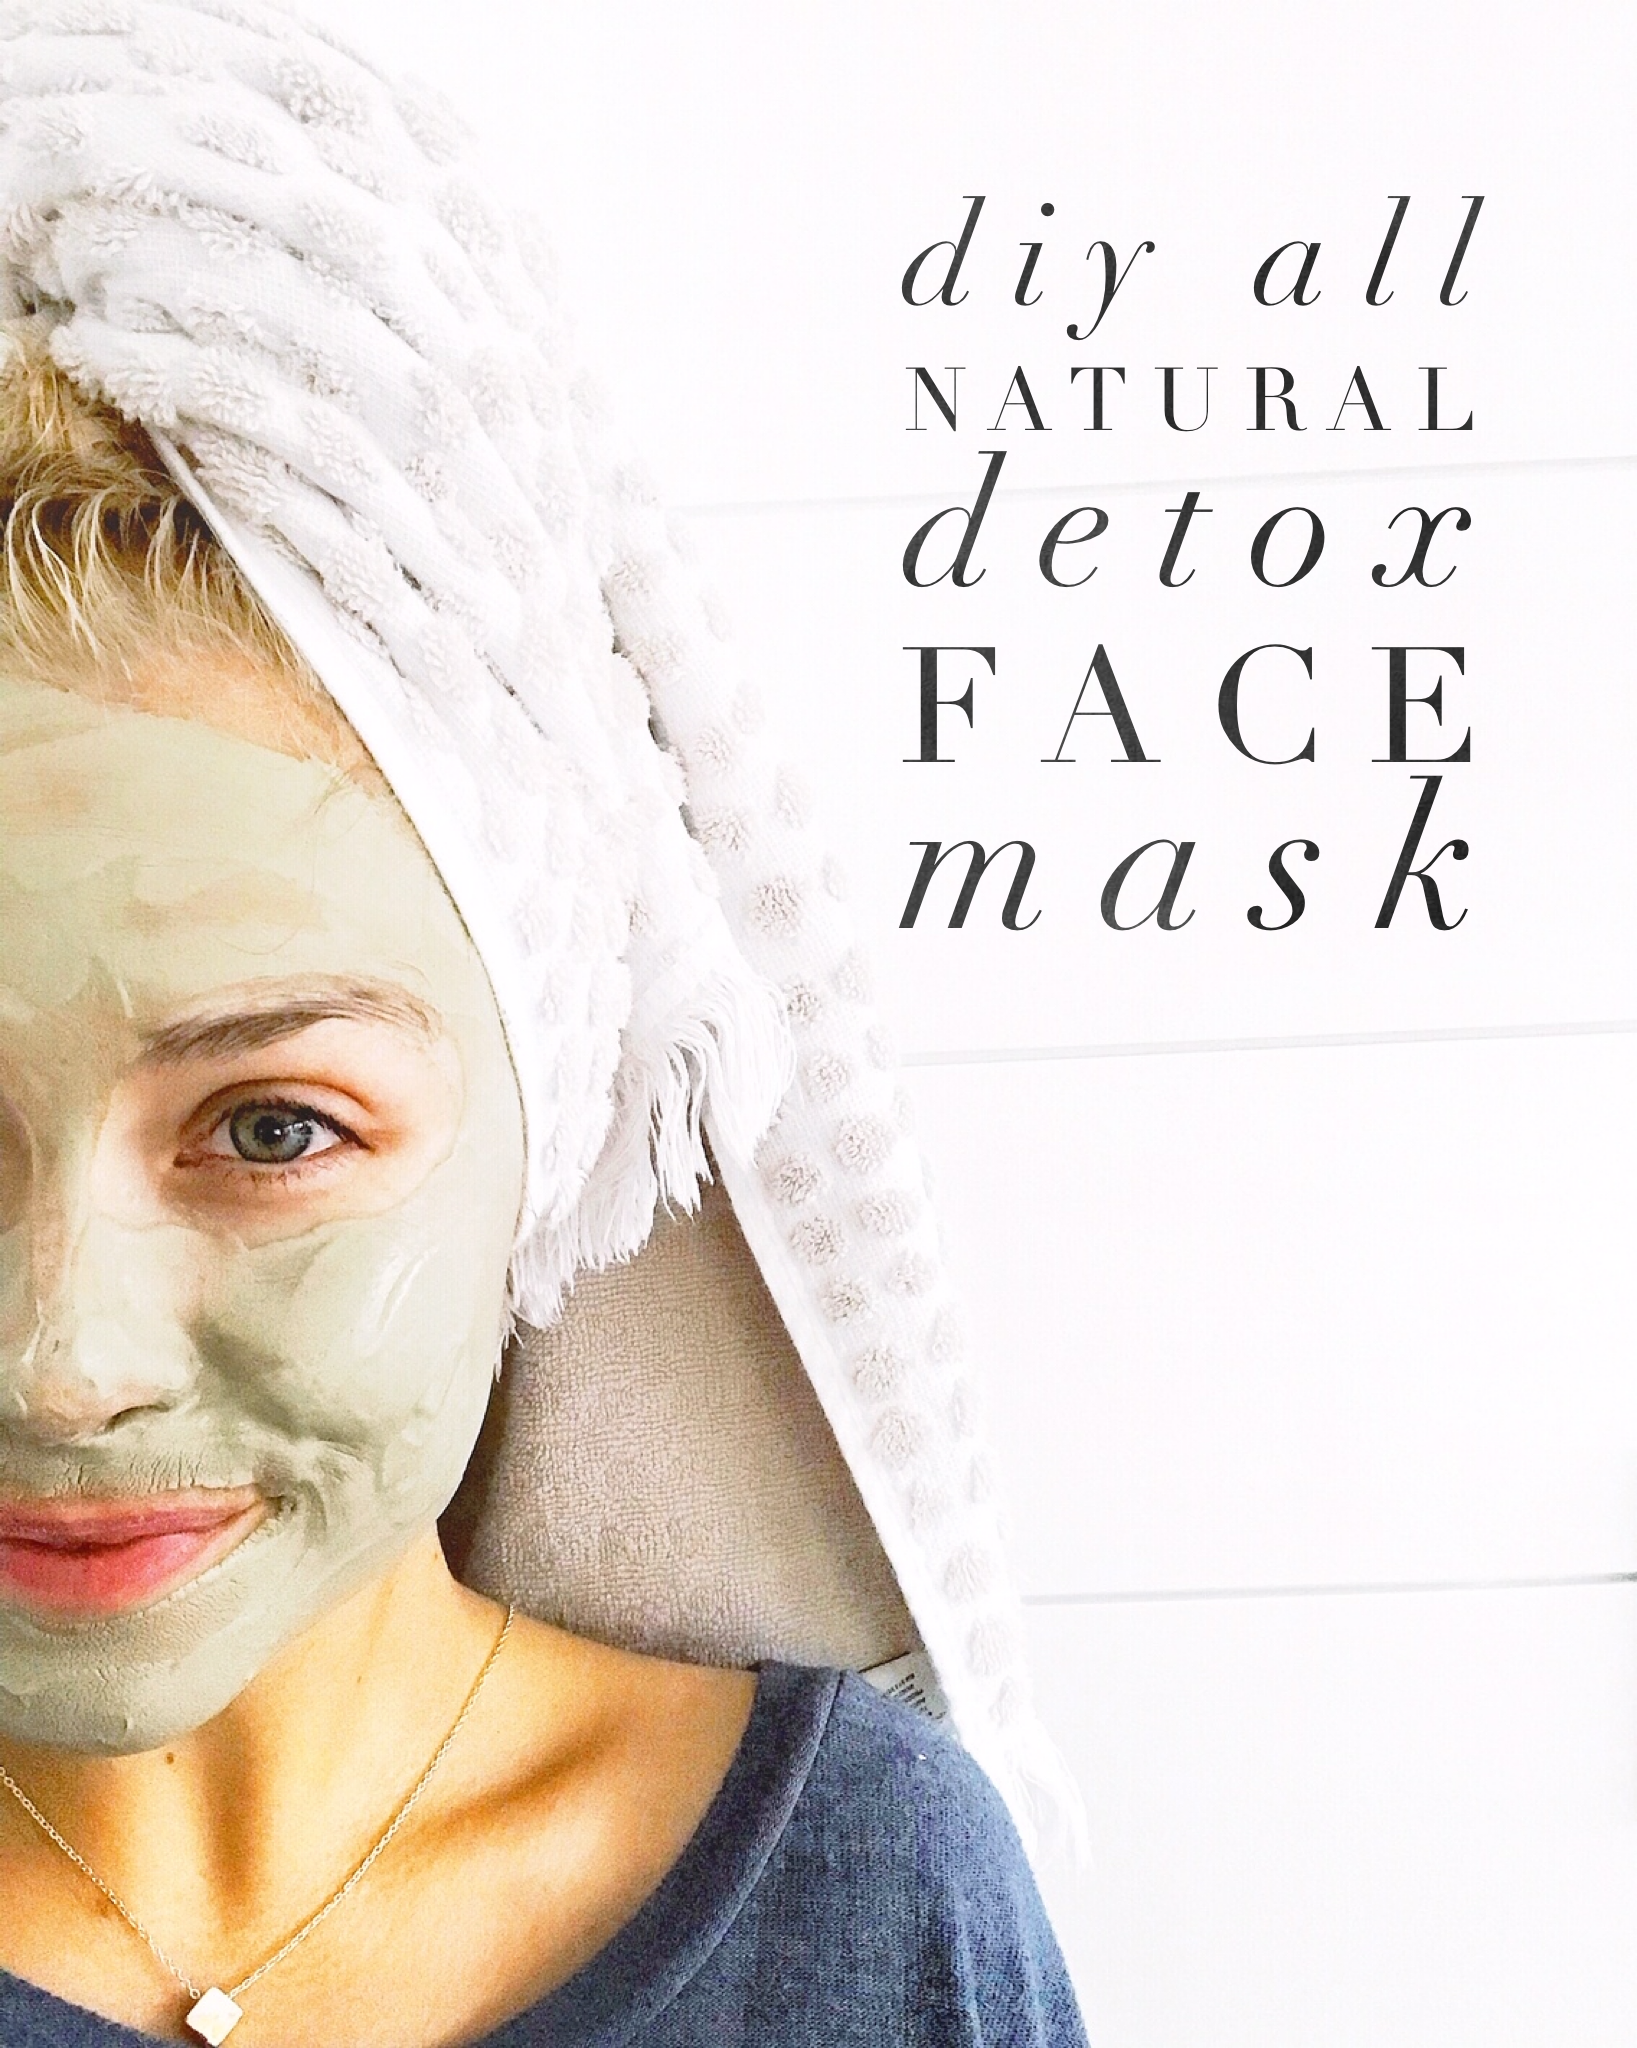 DIY all natural detox face mask - DIY all natural detox face mask -   14 diy Face Mask detox ideas